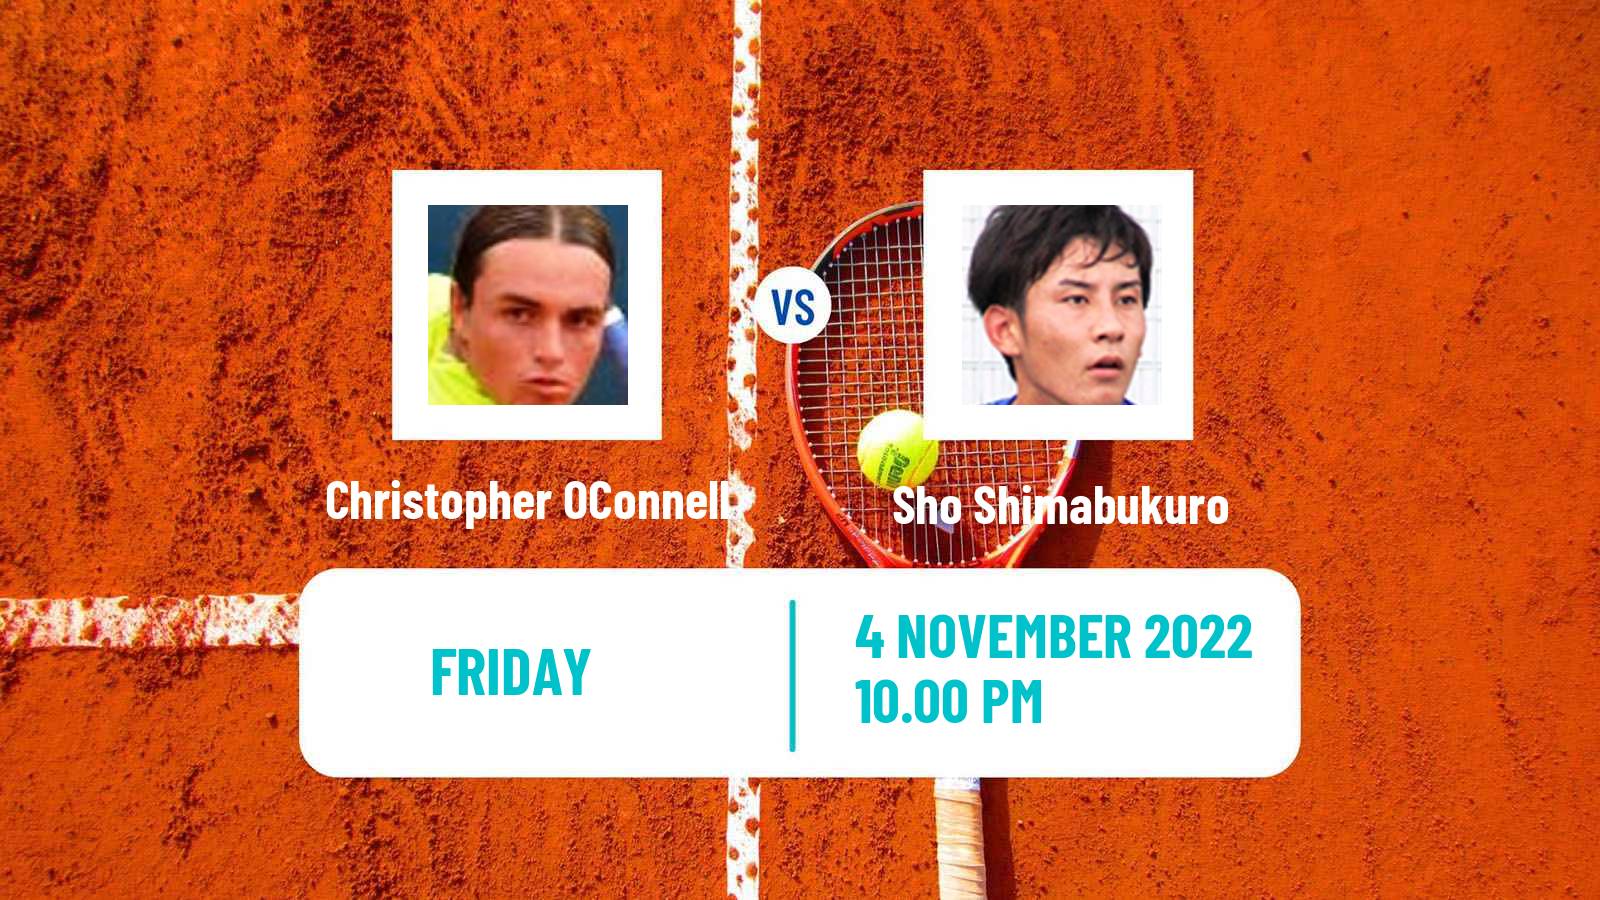 Tennis ATP Challenger Christopher OConnell - Sho Shimabukuro